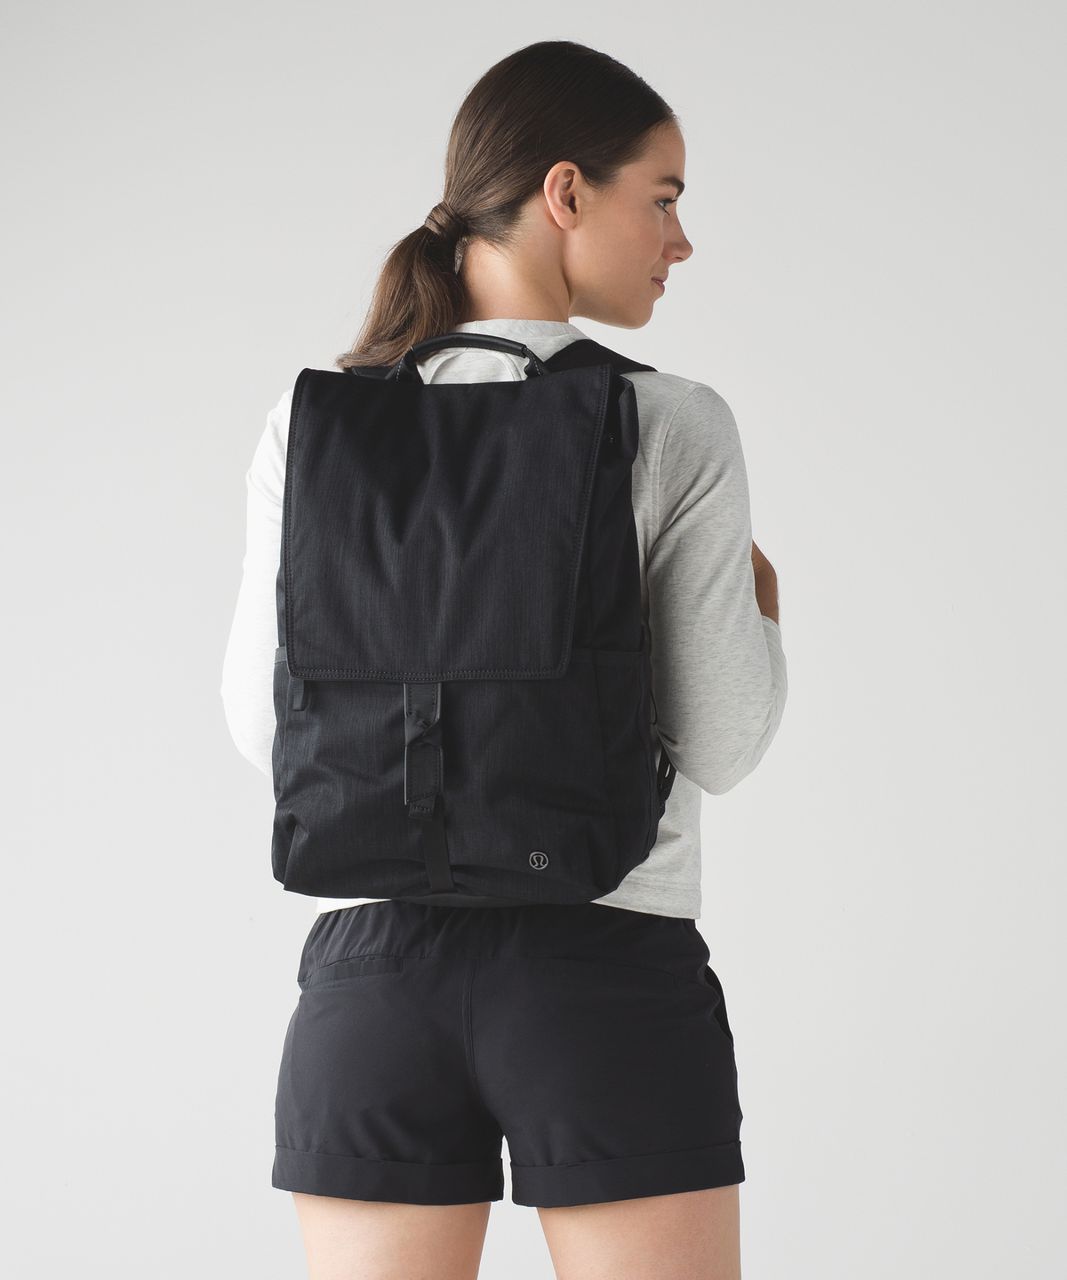 lululemon urbanite backpack